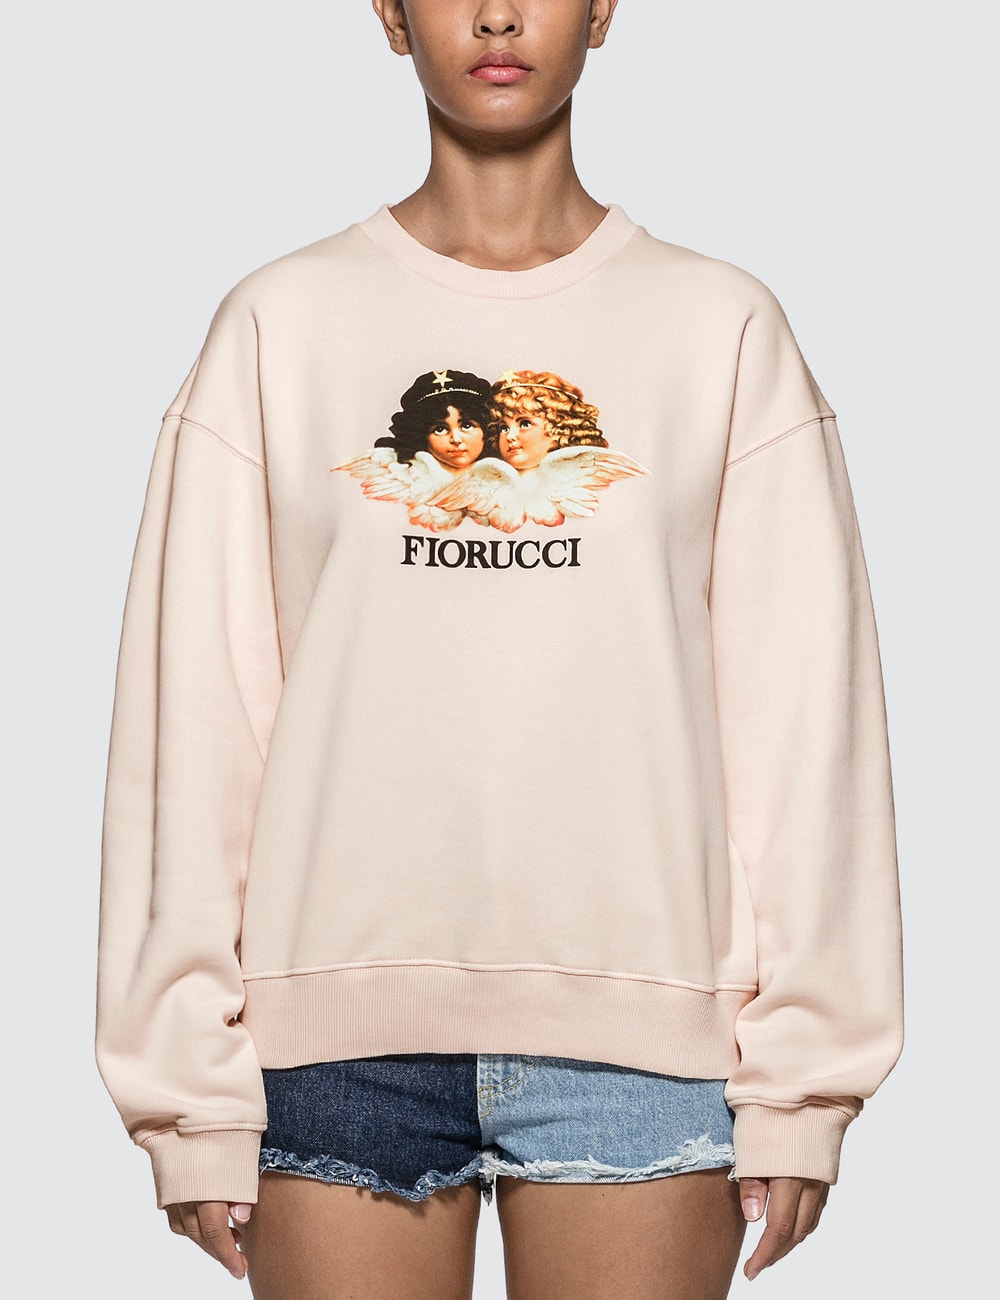 Fiorucci - Vintage Angels Sweatshirt | HBX